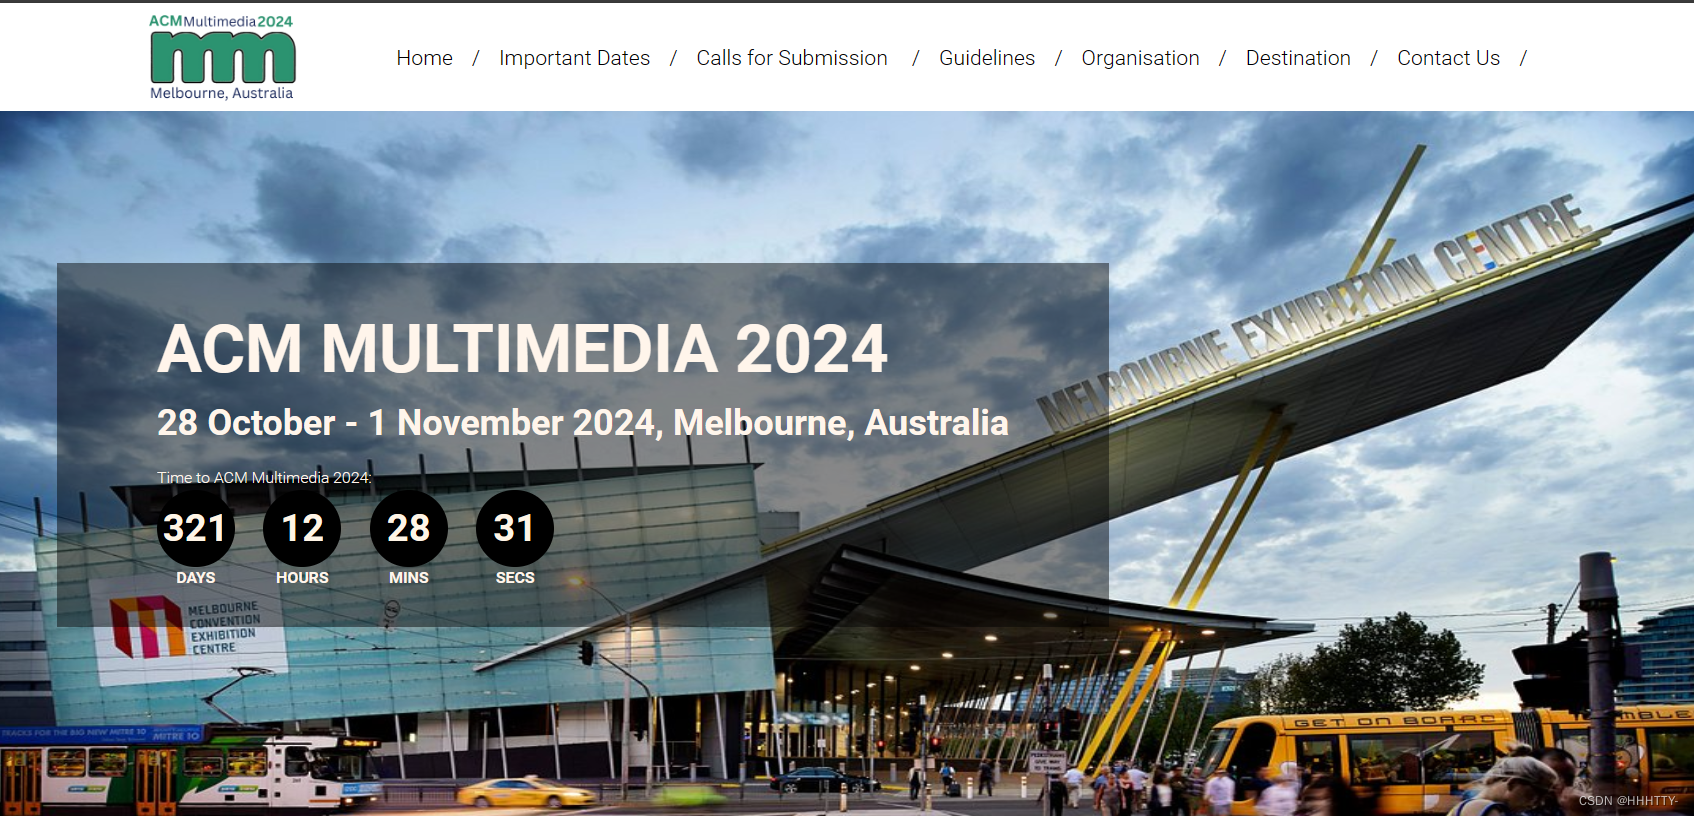 ACMMM 2024 ACM International Conference on Multimedia